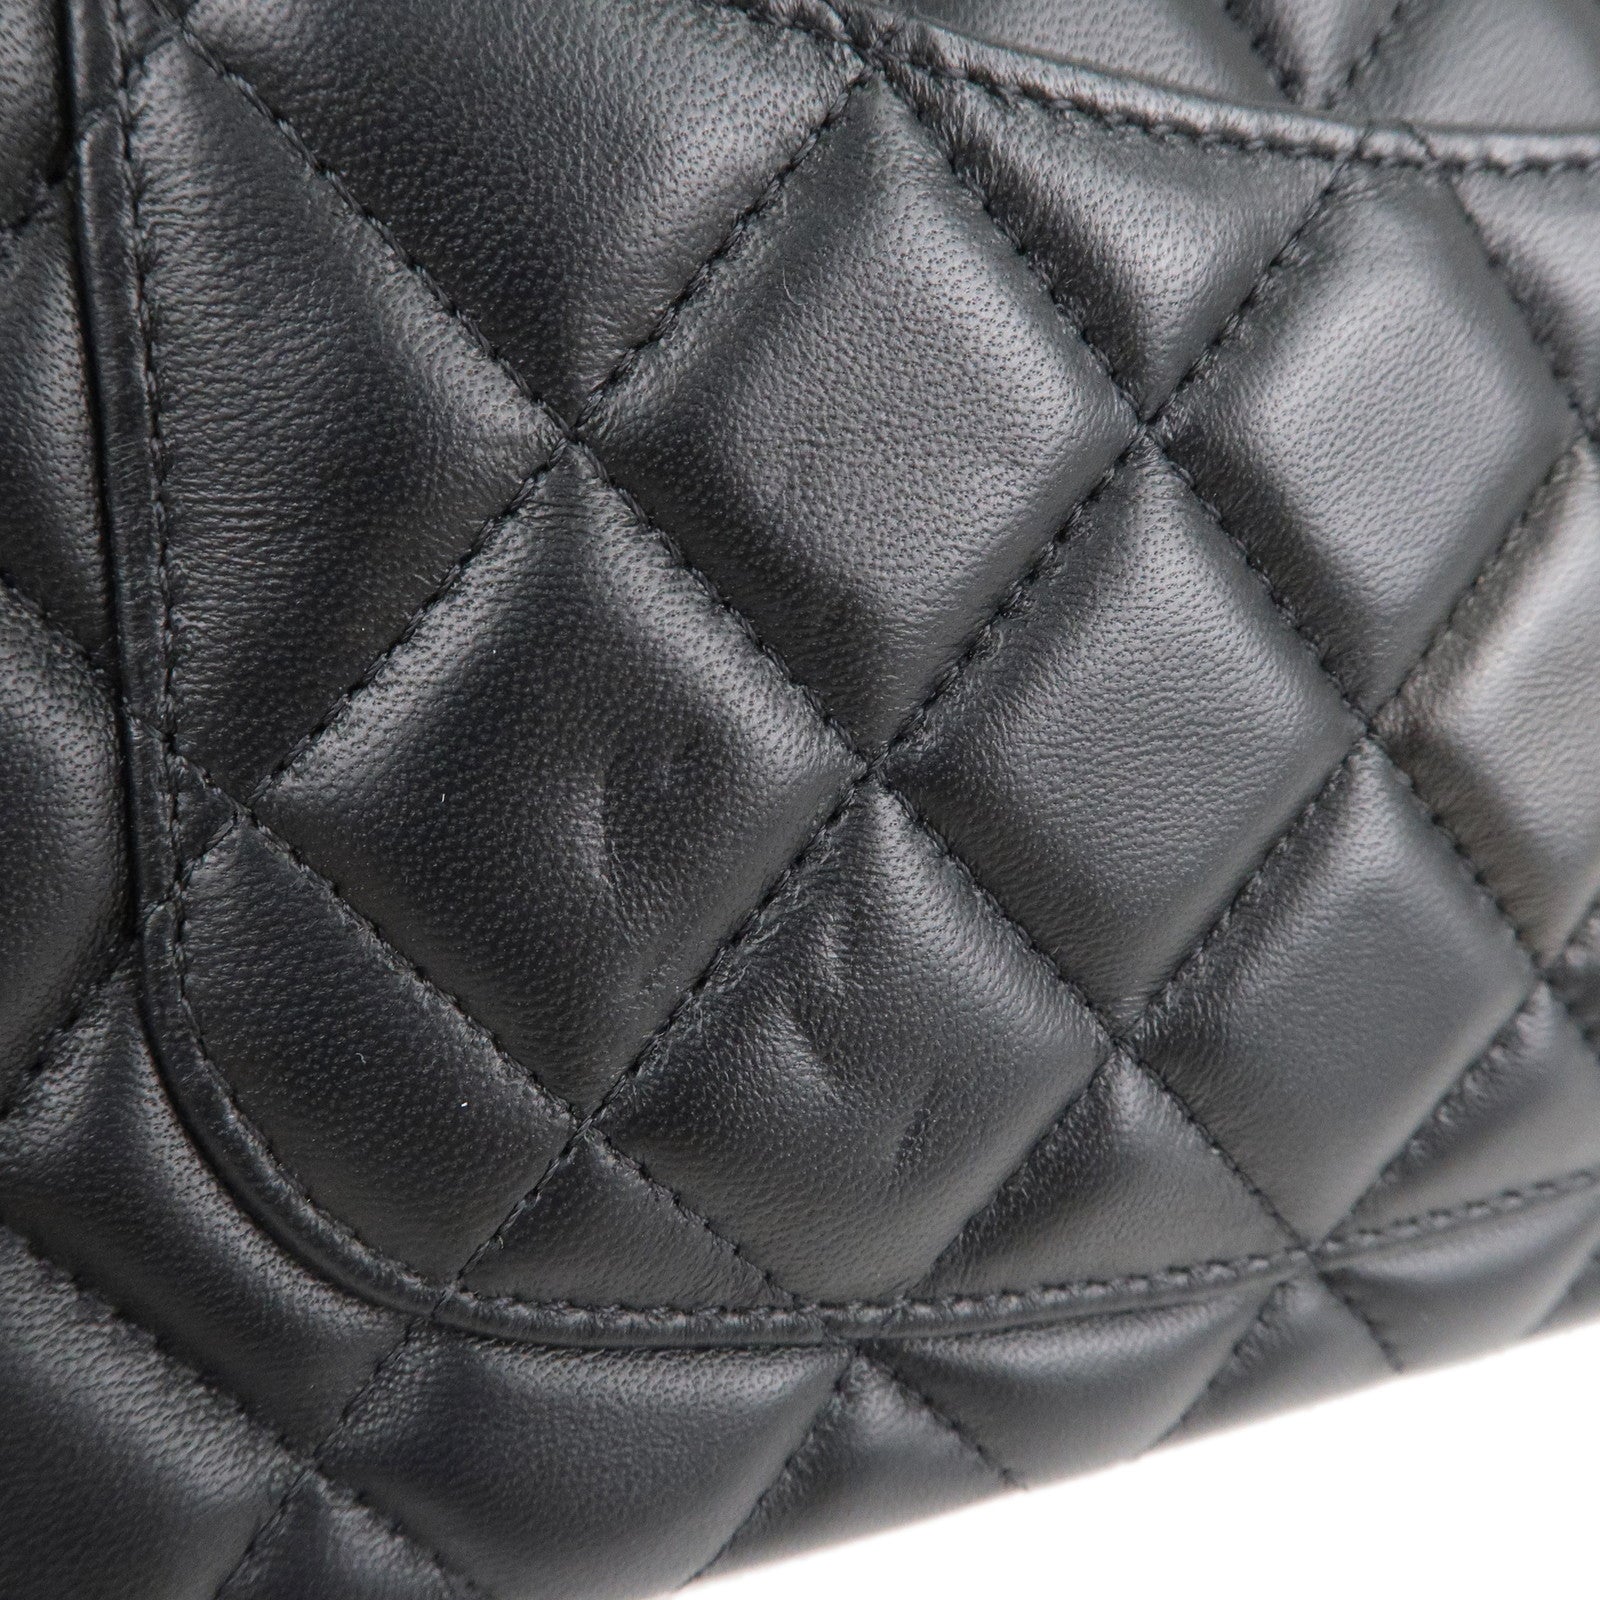 Chanel Lambskin Matelasse Chain Shoulder Bag Black Ladies from japan